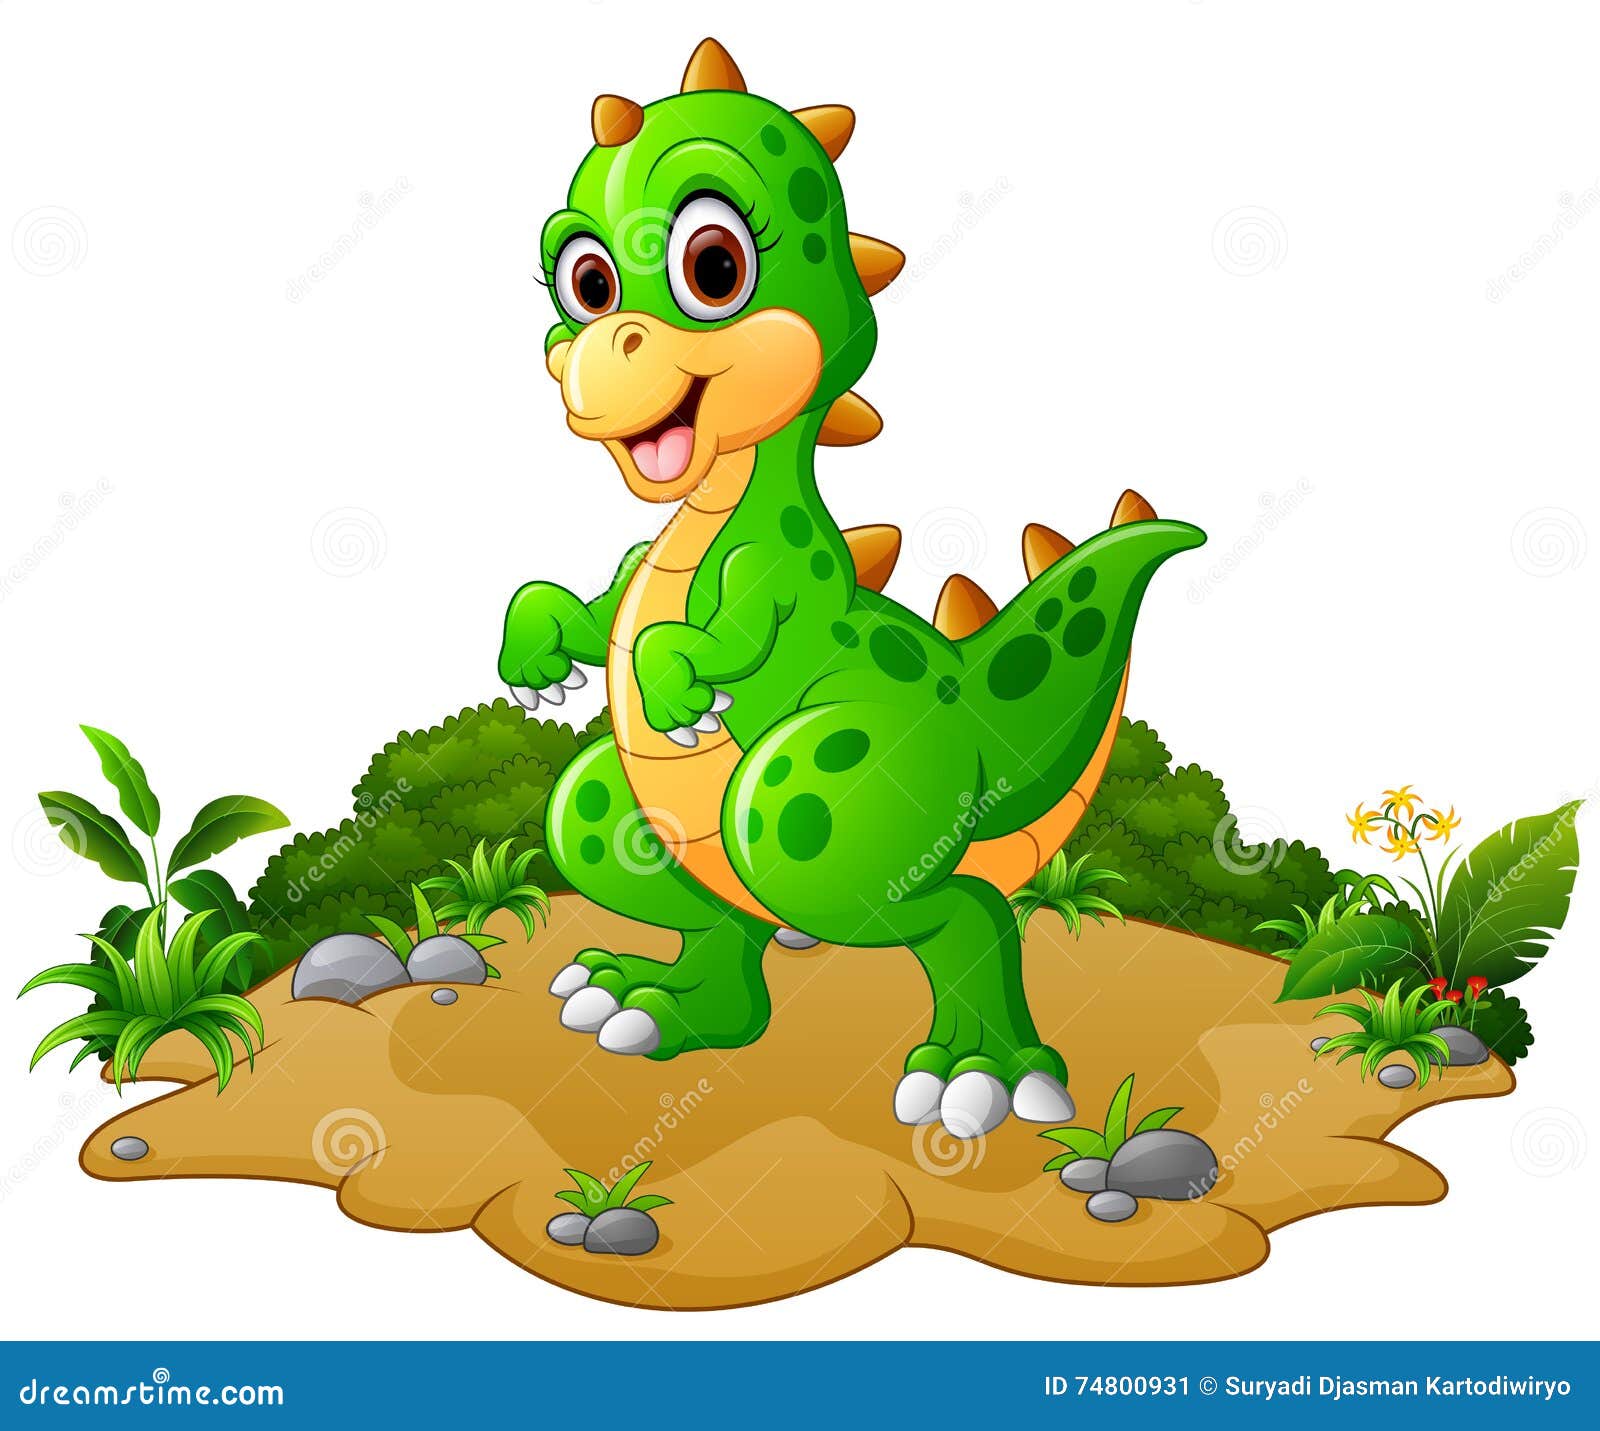 A Happy Cartoon Dinosaur Jumping And Smiling. Royalty Free SVG, Cliparts,  Vectors, and Stock Illustration. Image 26468966.